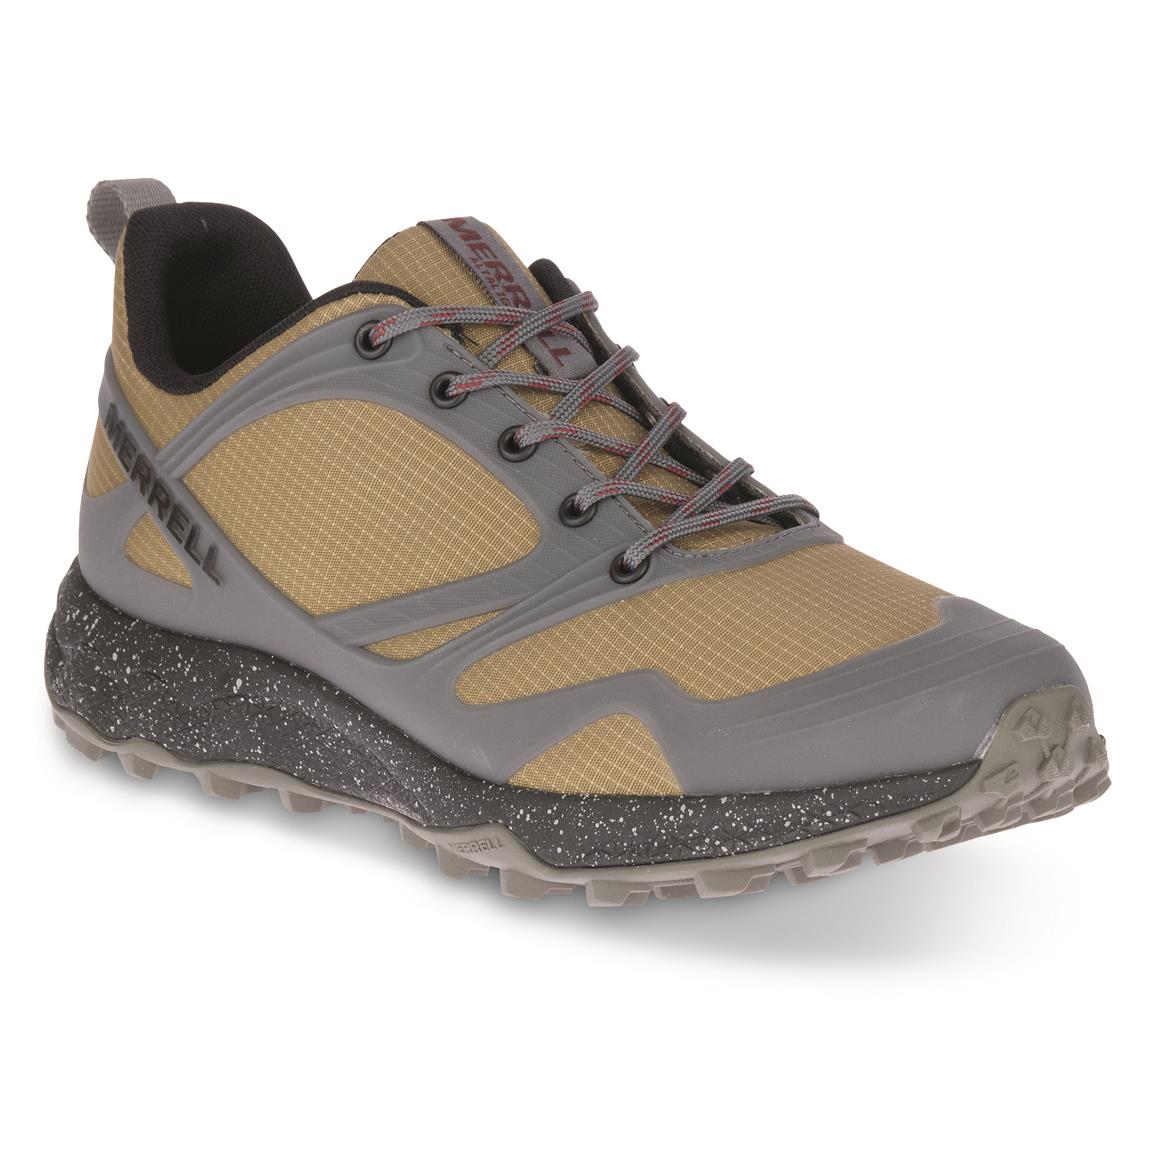 Merrell Men's Altalight Hiking Shoes, Butternut